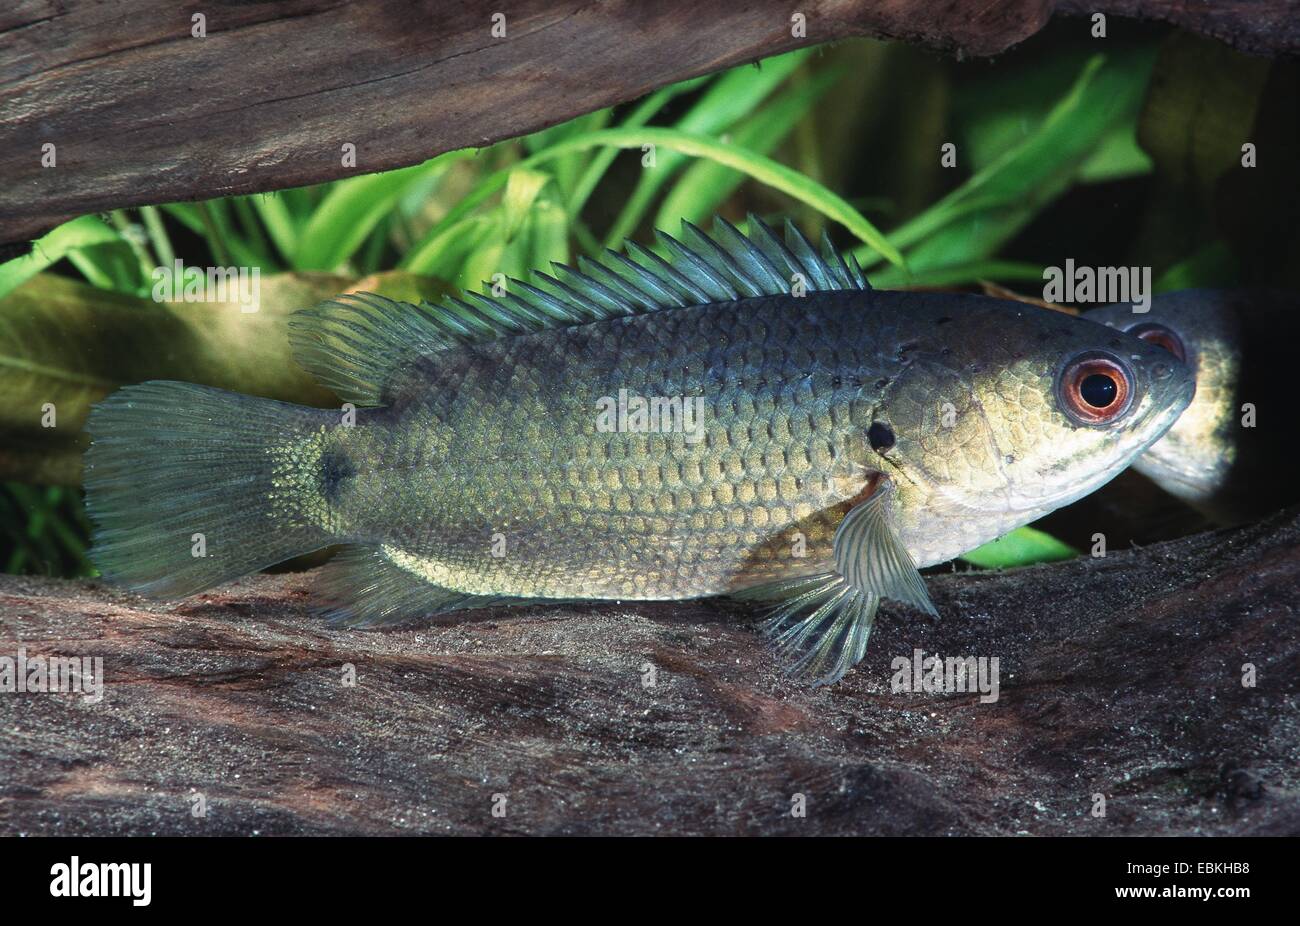 climbing perch, climbing gourami, walking fish (Anabas testudineus) Stock Photo